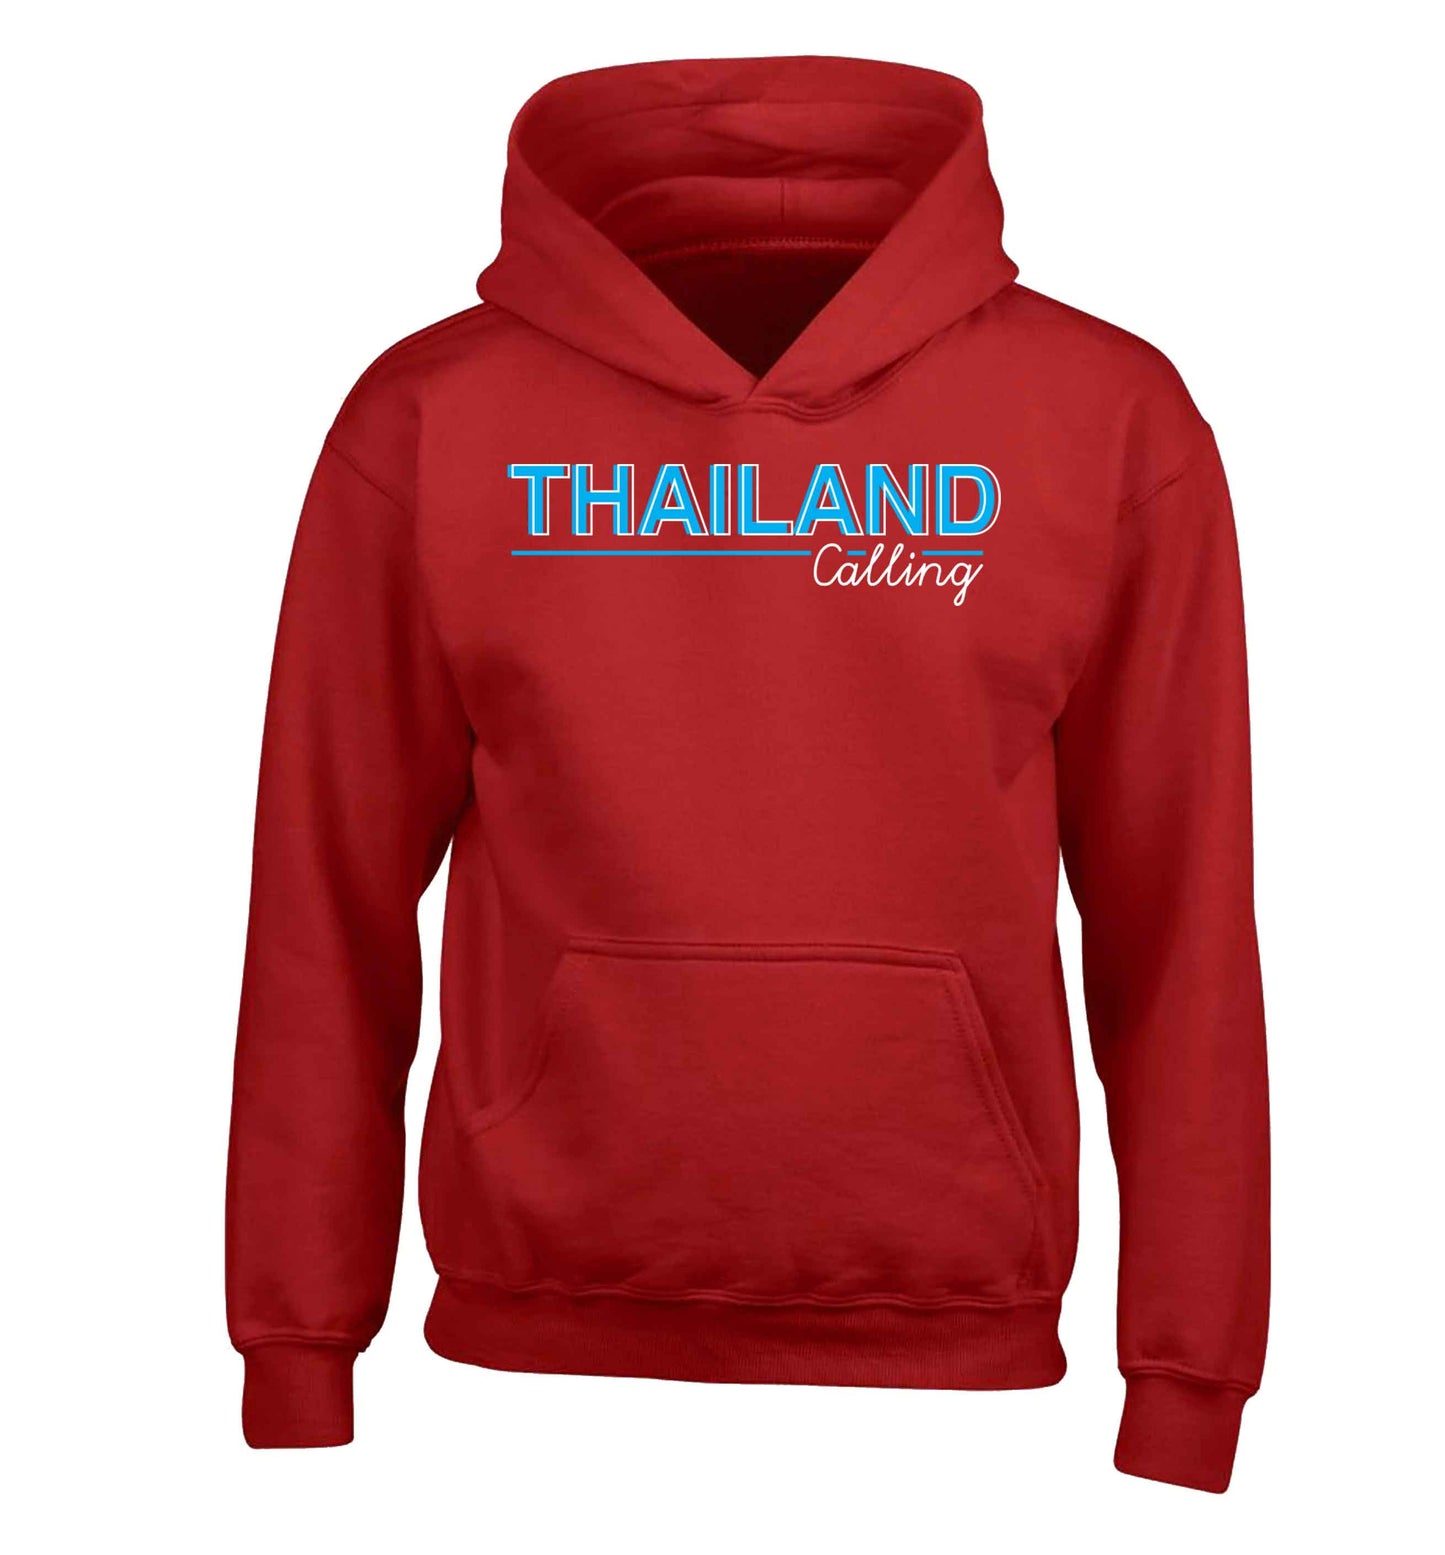 Thailand calling children's red hoodie 12-13 Years